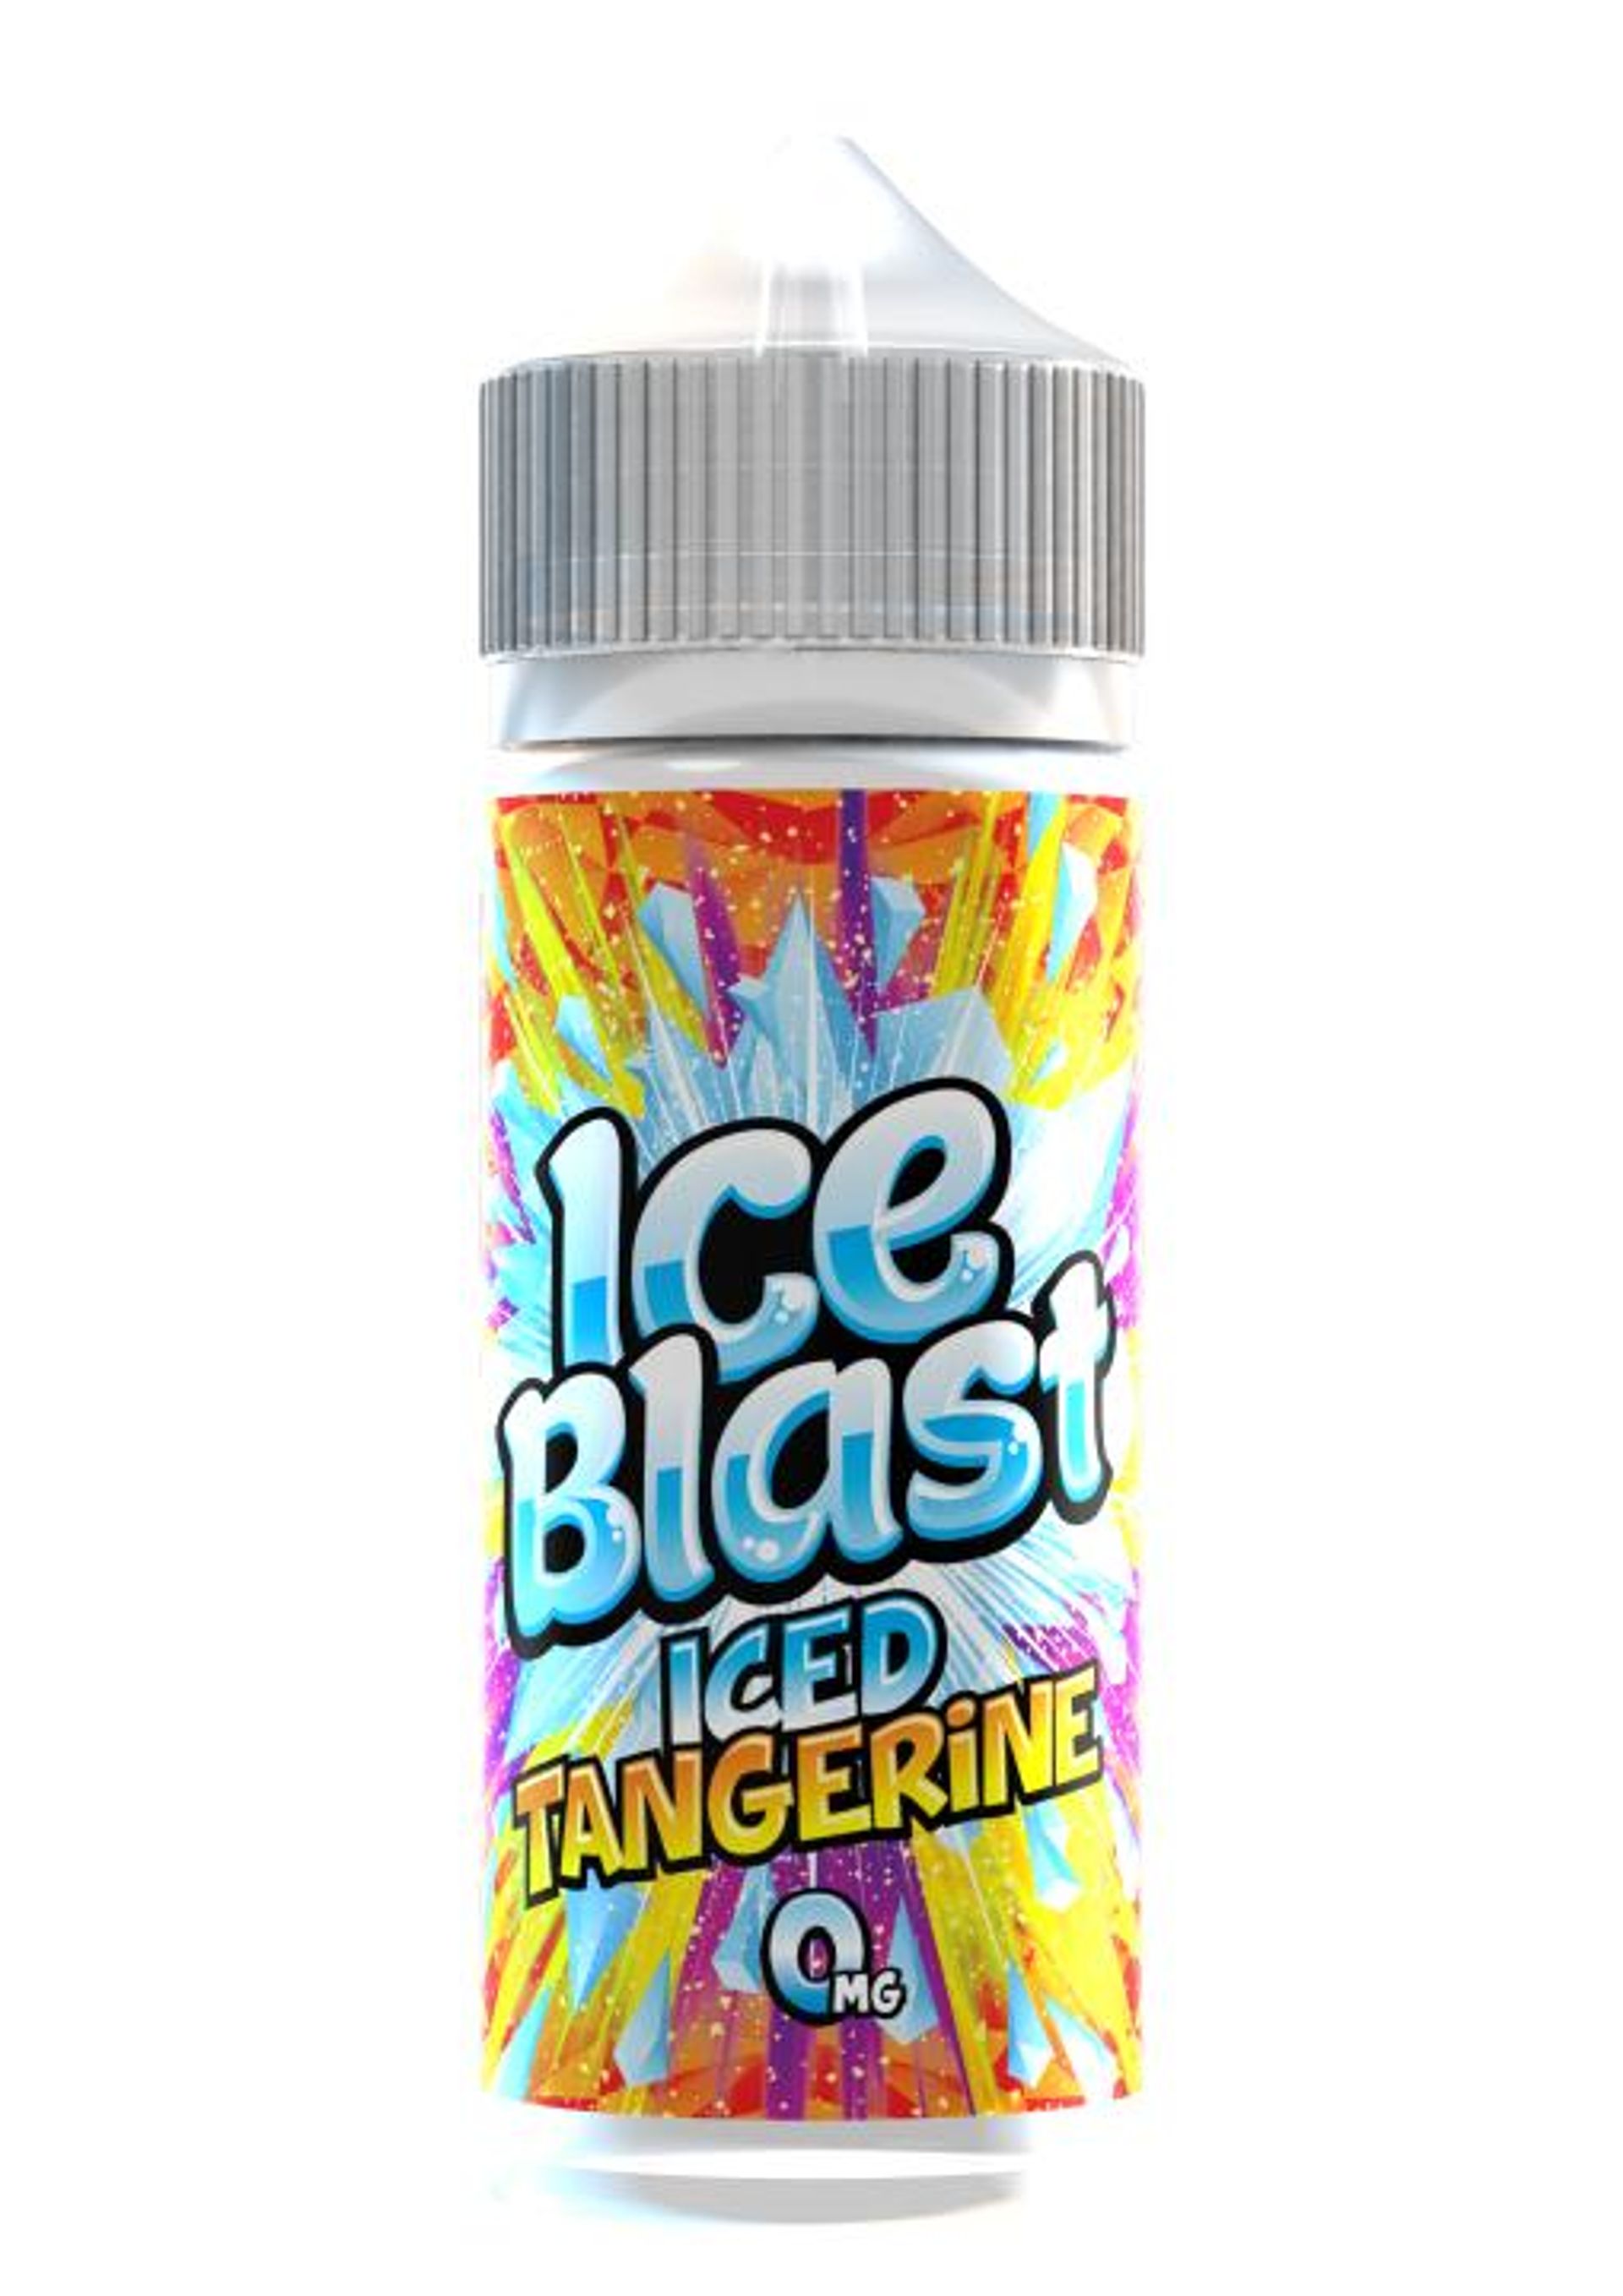 Image of Iced Tangerine by Ice Blast